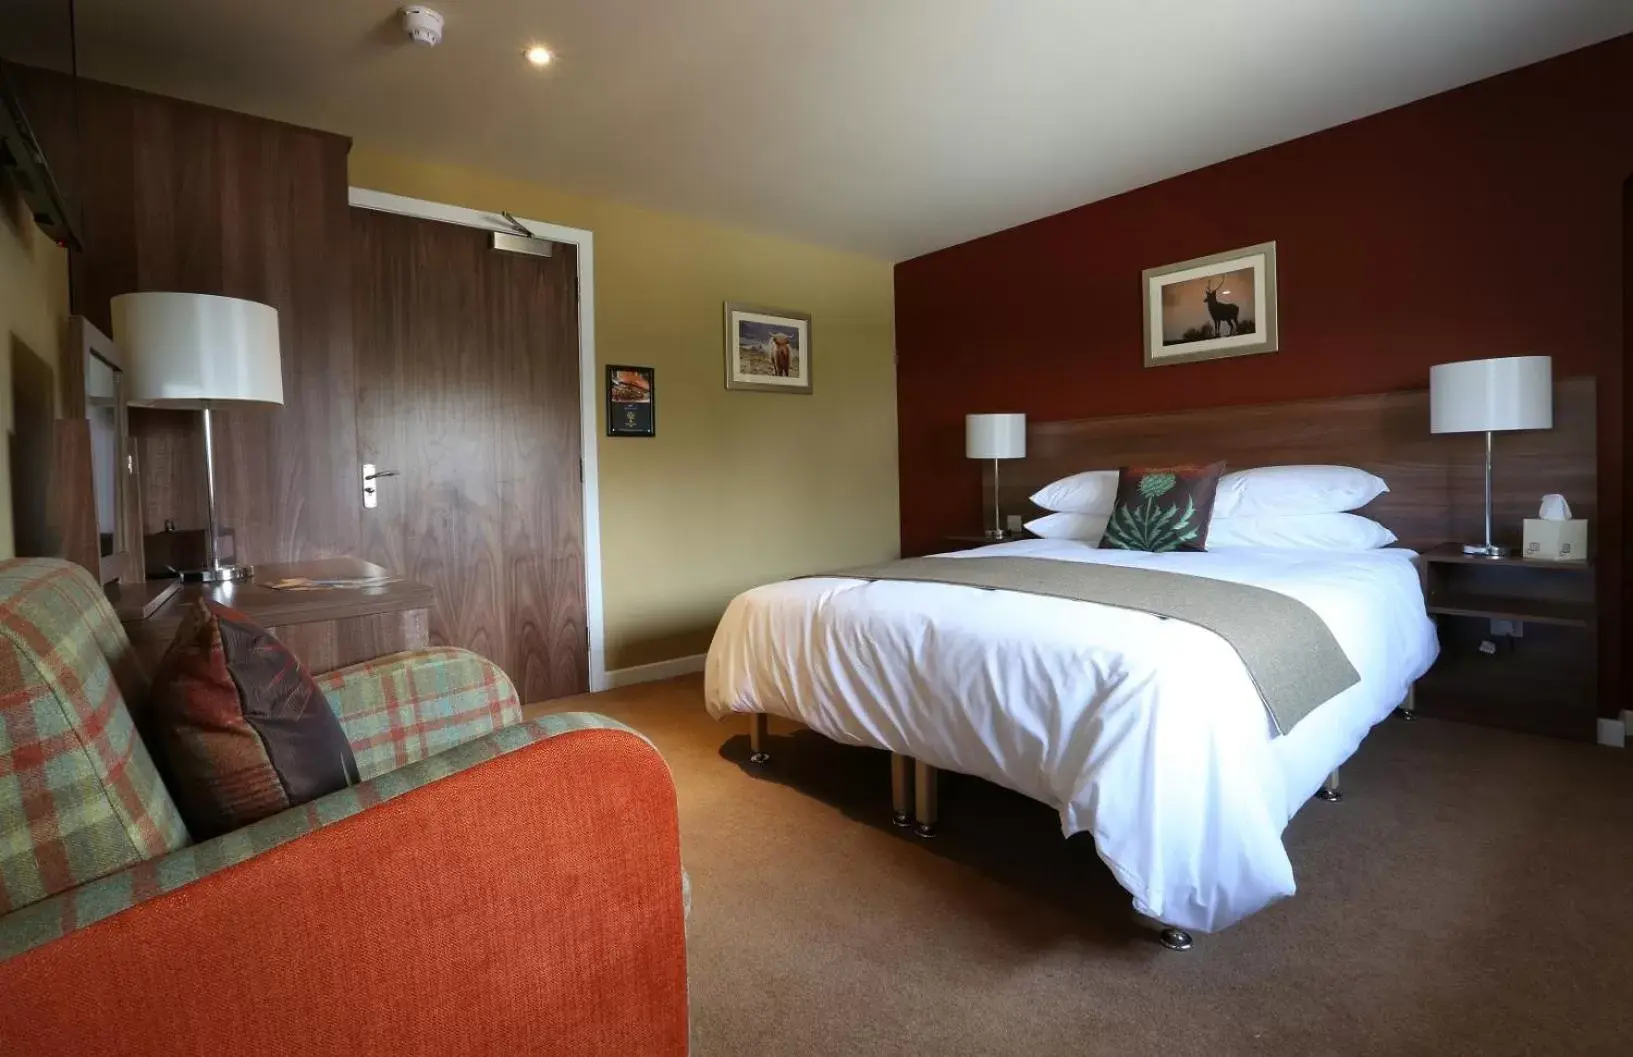 Bed, Room Photo in Newburgh Inn